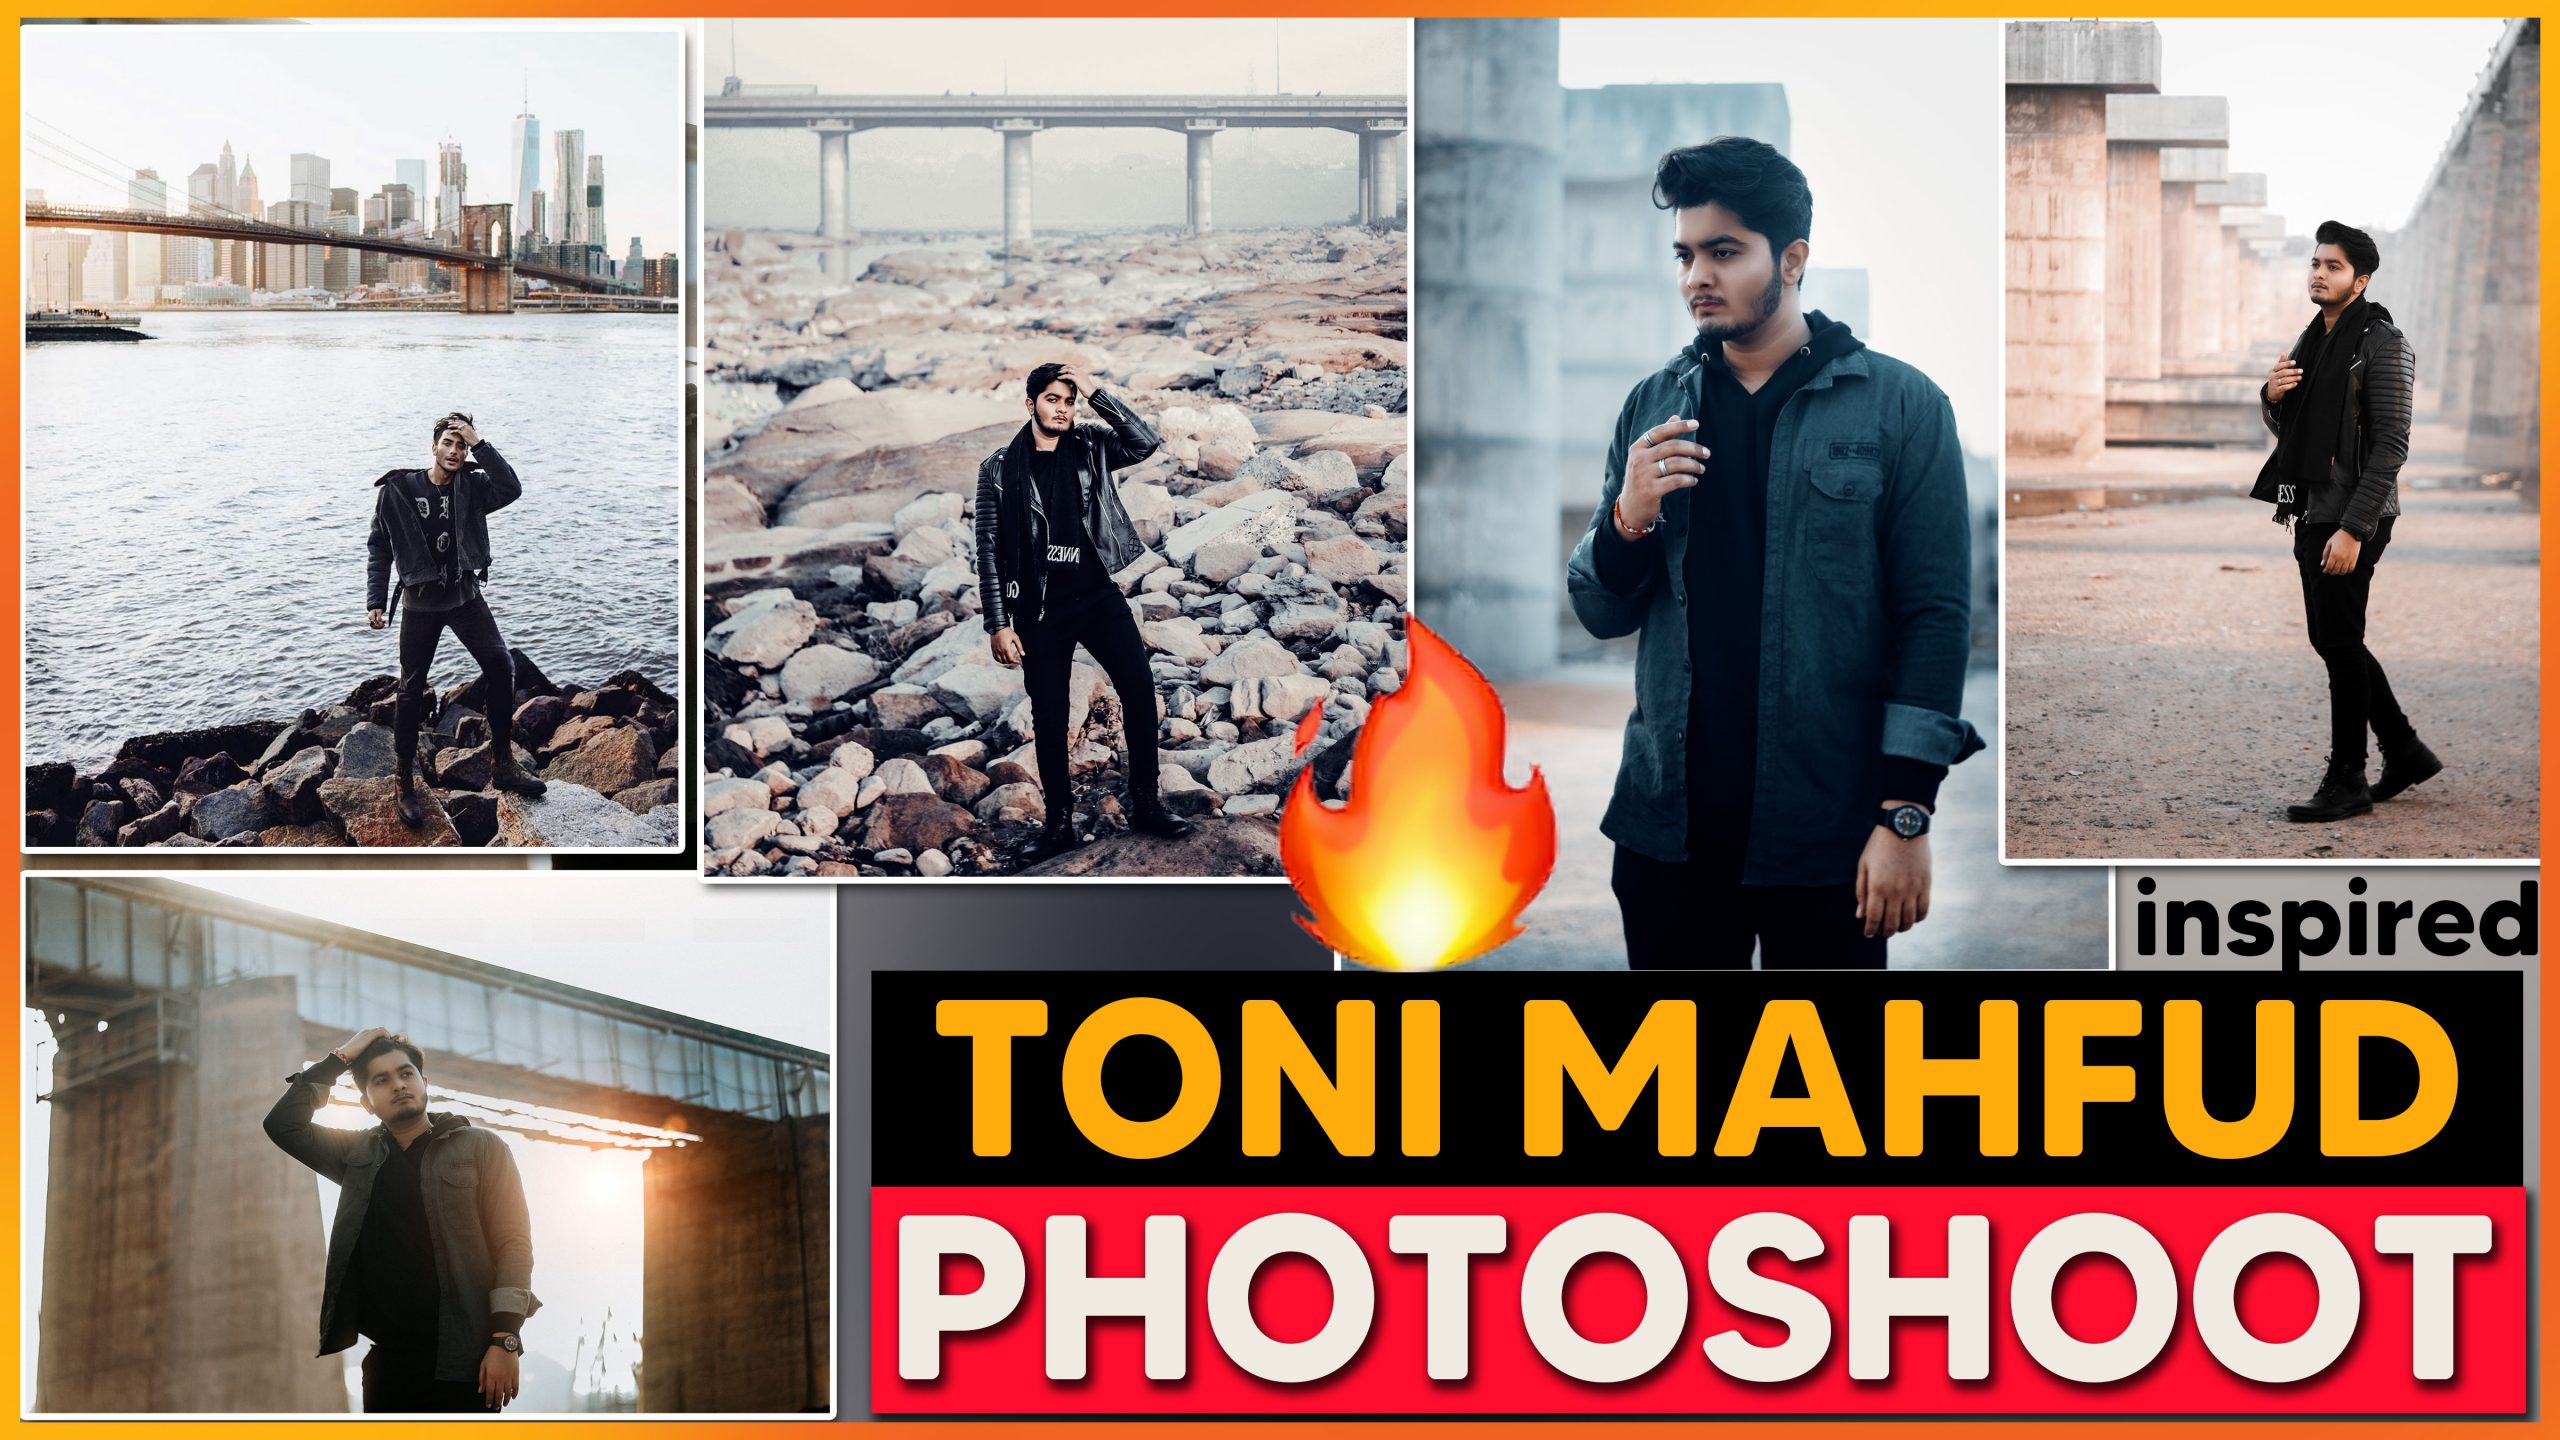 Toni Mahfud Photoshoot Wallpapers